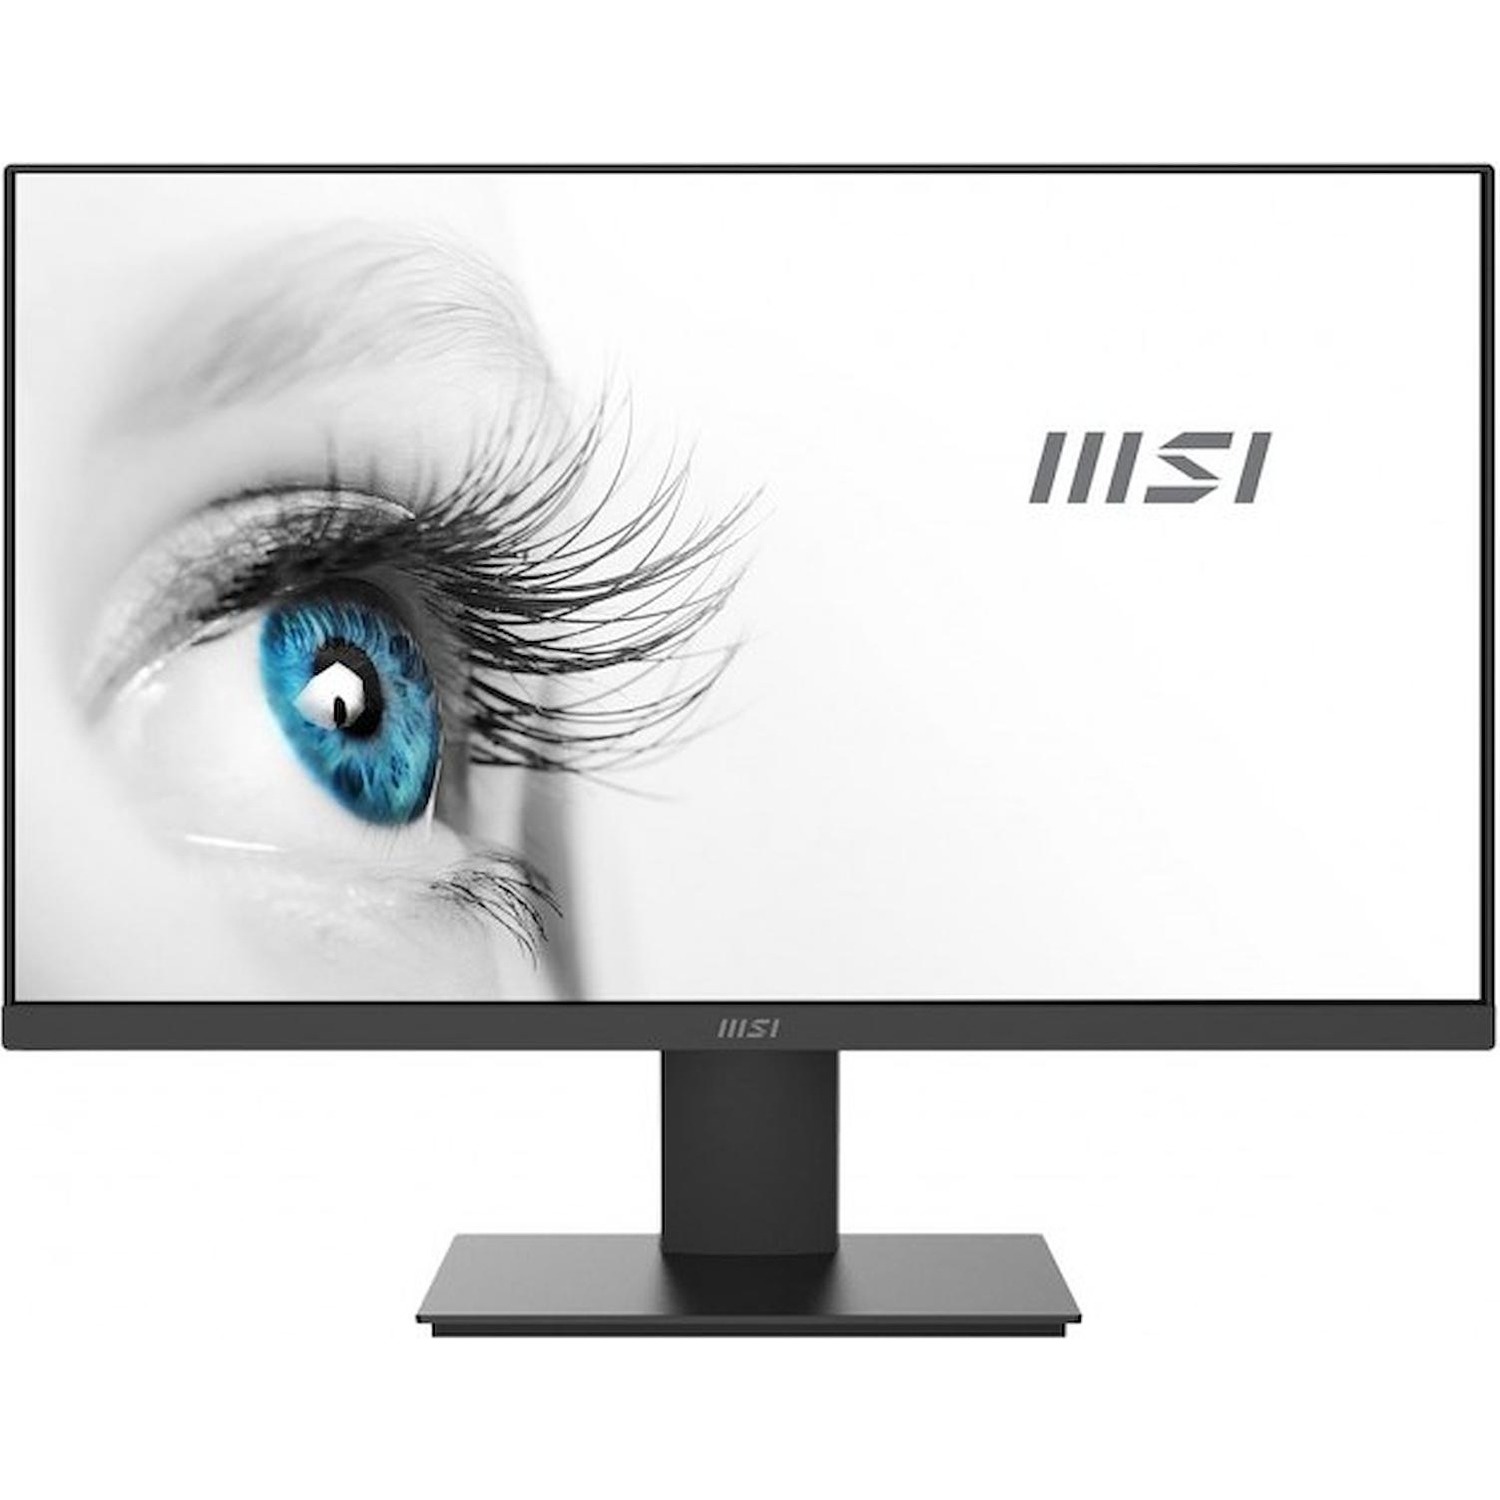 Immagine per Monitor MSI 23,8" LED 16:9 FULL HD Gaming         Vesa Ready 75x75,Inclinabile,VGA/HDMI da DIMOStore